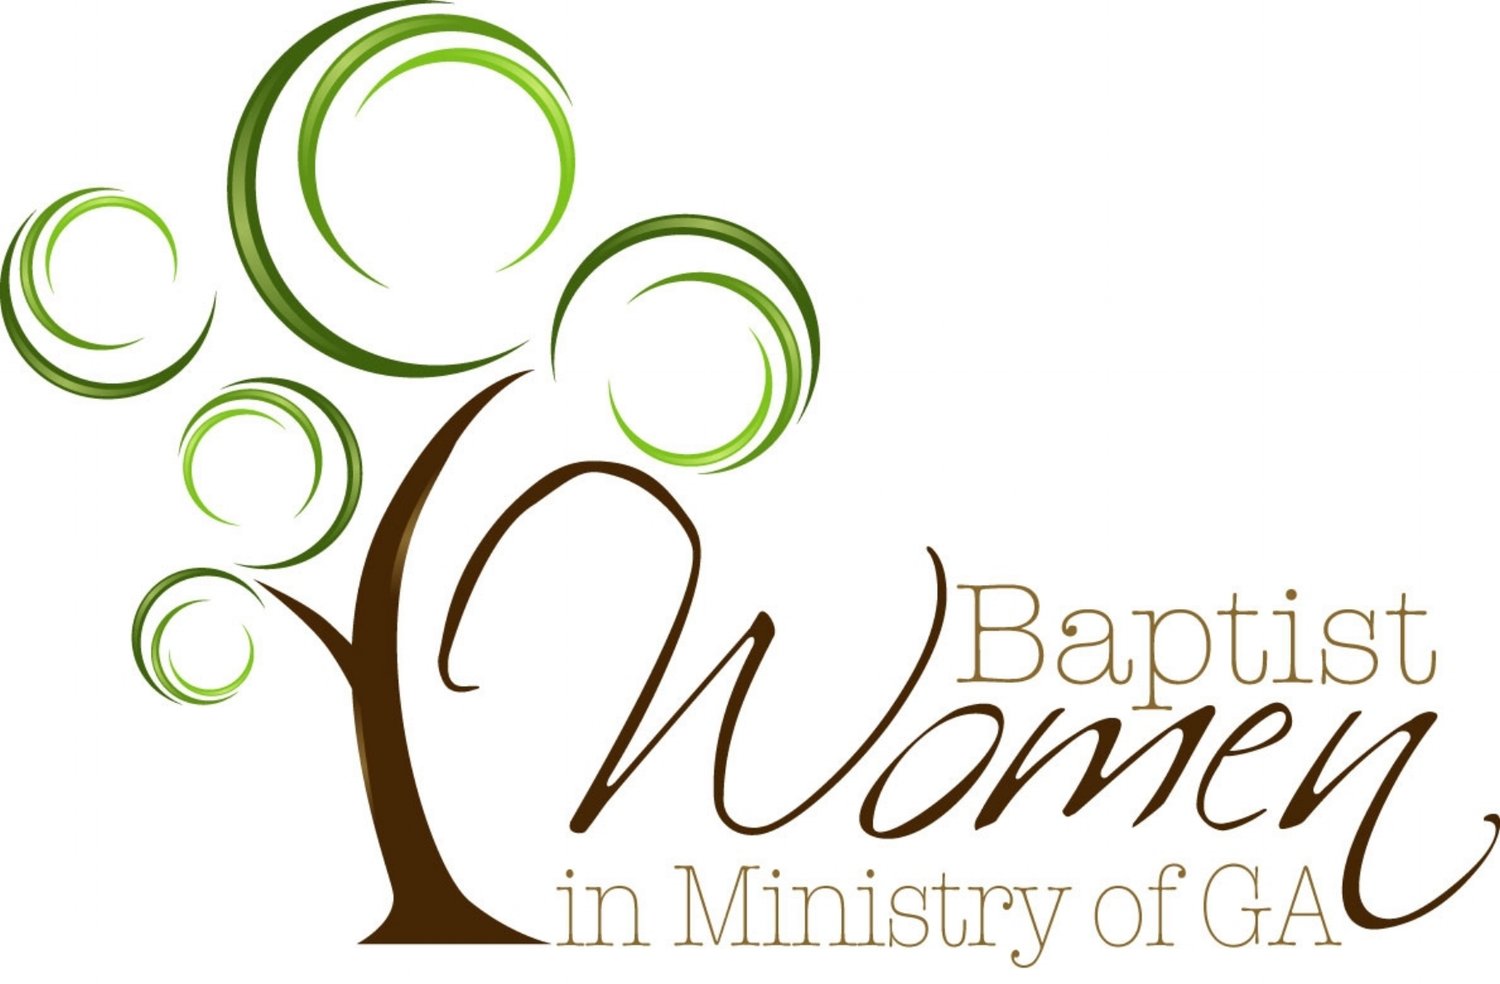 Baptist Women in Ministry of Georgia